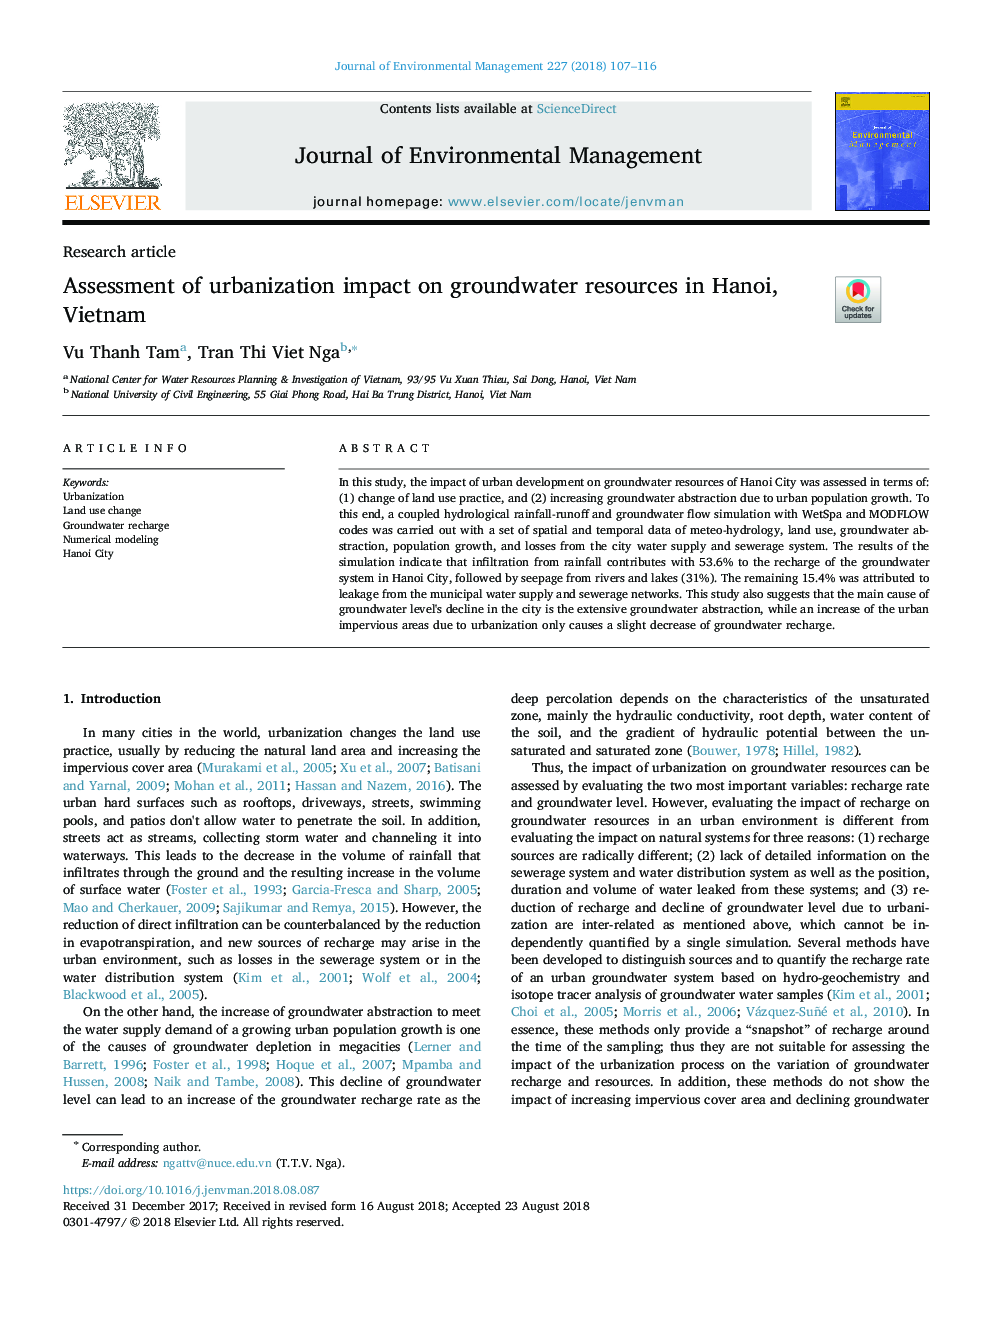 Assessment of urbanization impact on groundwater resources in Hanoi, Vietnam